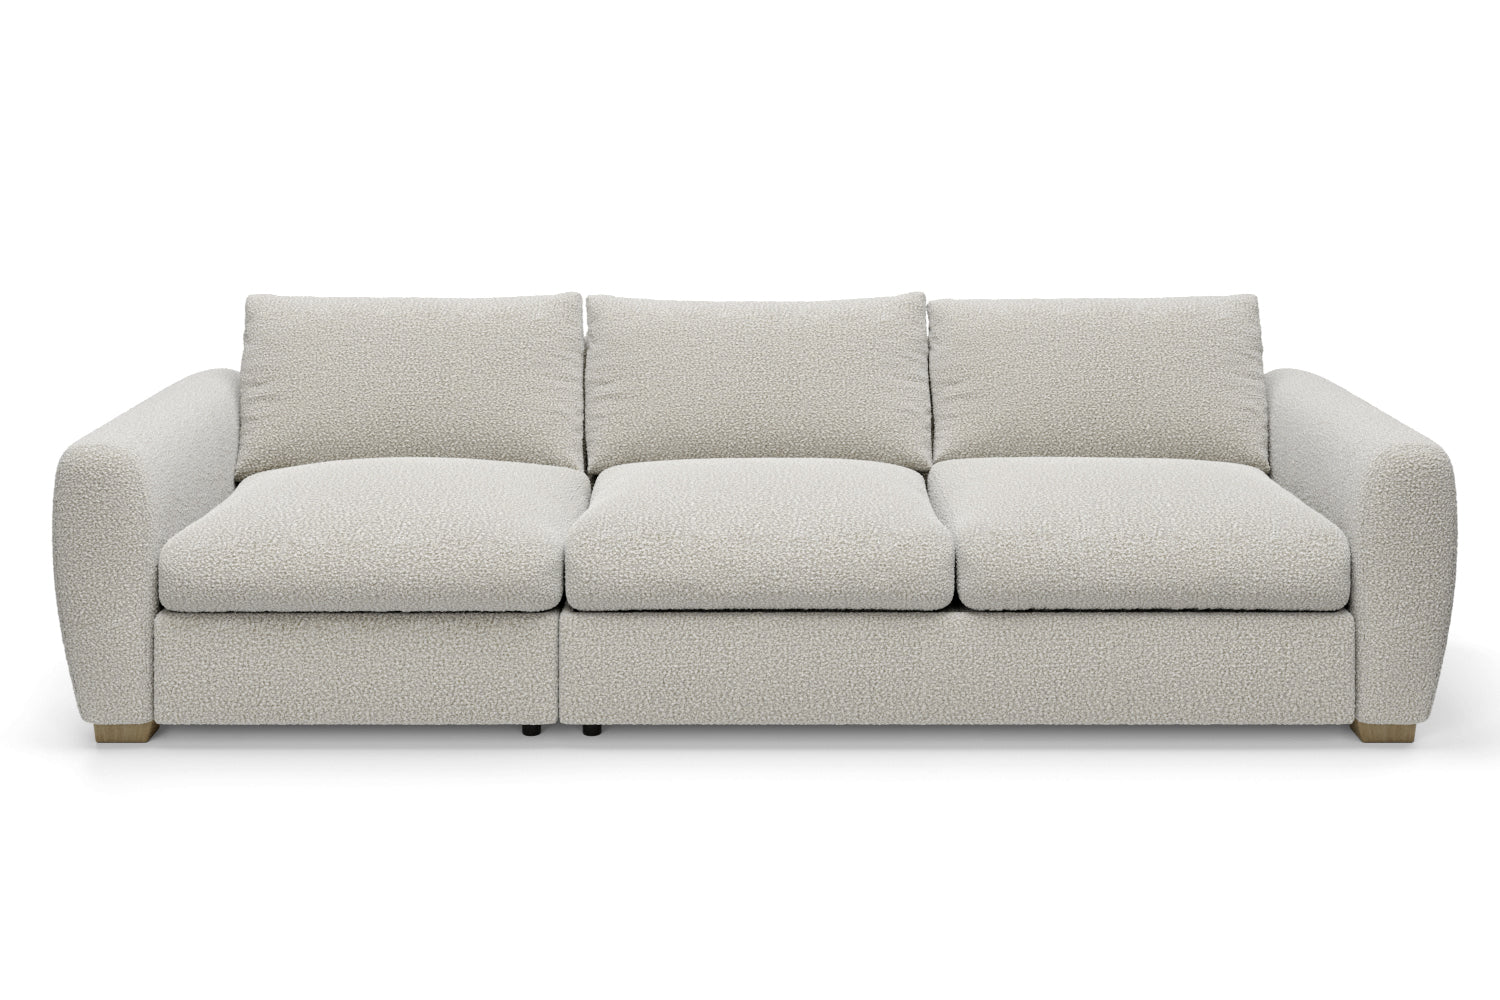 The Cloud Sundae - 4.5 Seater Sofa - Fuzzy White Boucle